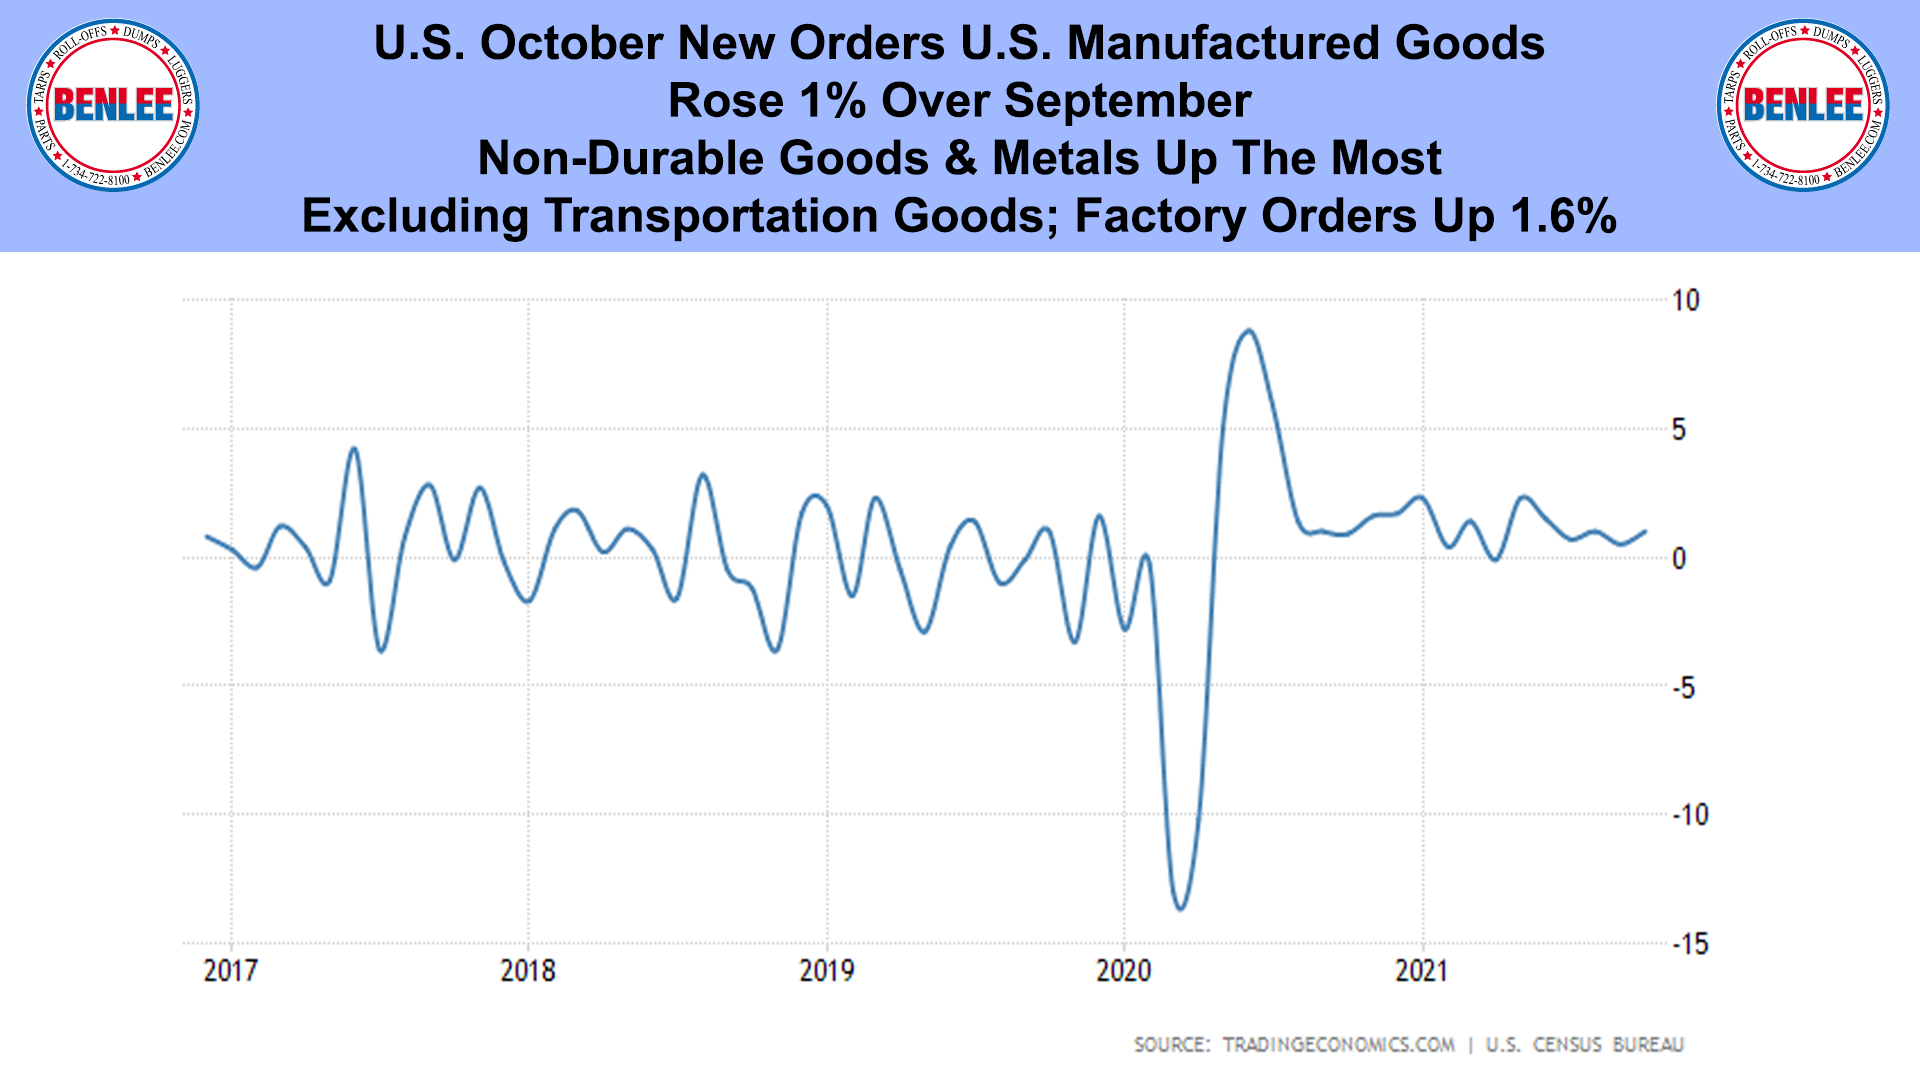 U.S. October New Orders U.S. Manufactured Goods